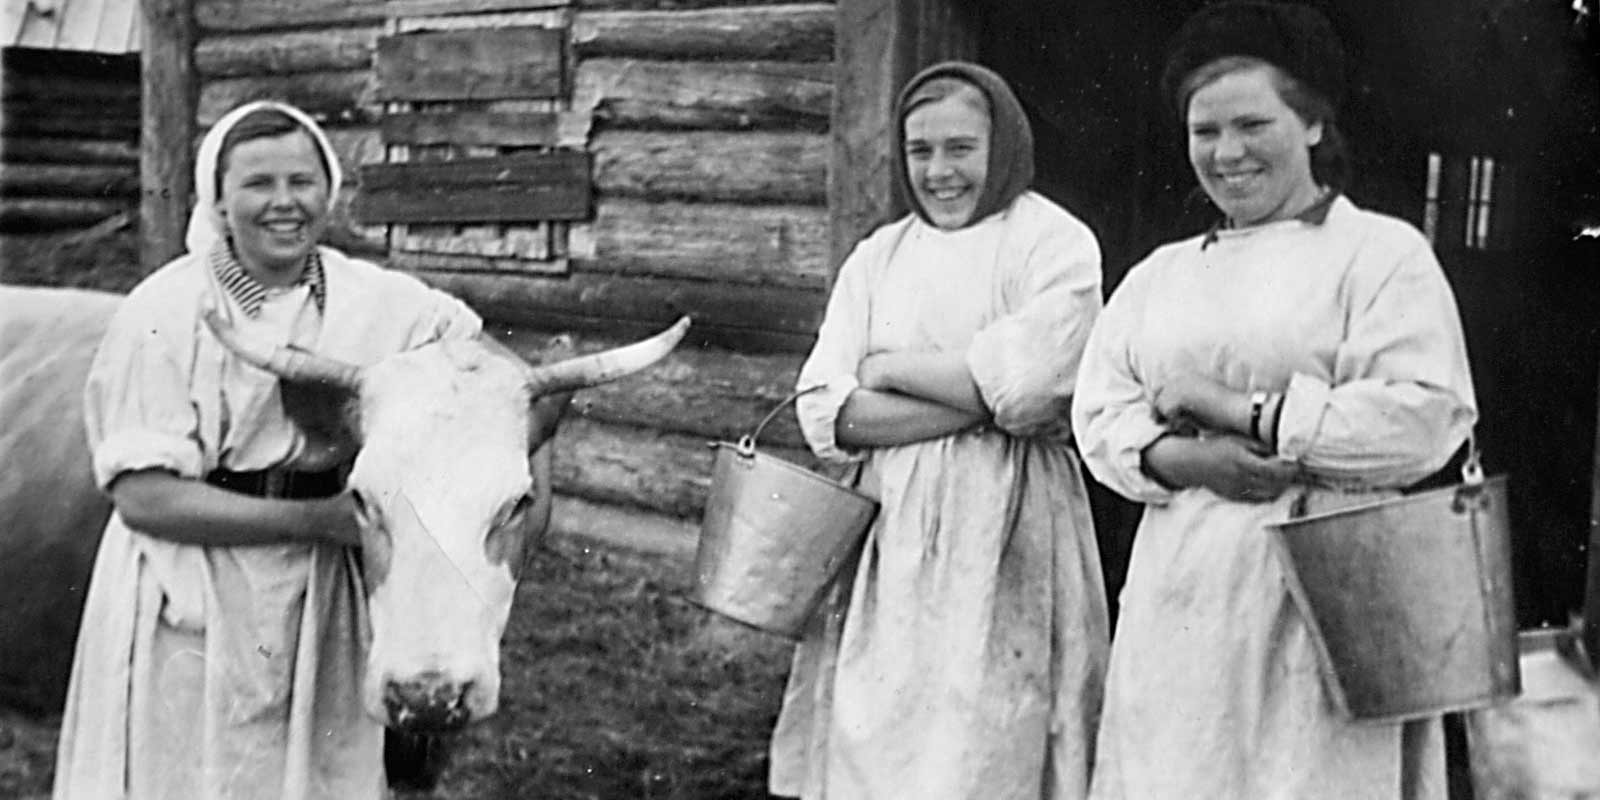 Kolkhoz milkmaids of the Haidak village: Maria Peterson (on the left), Lidia Kondratieva (on the right). Private collection, Maria Peterson.